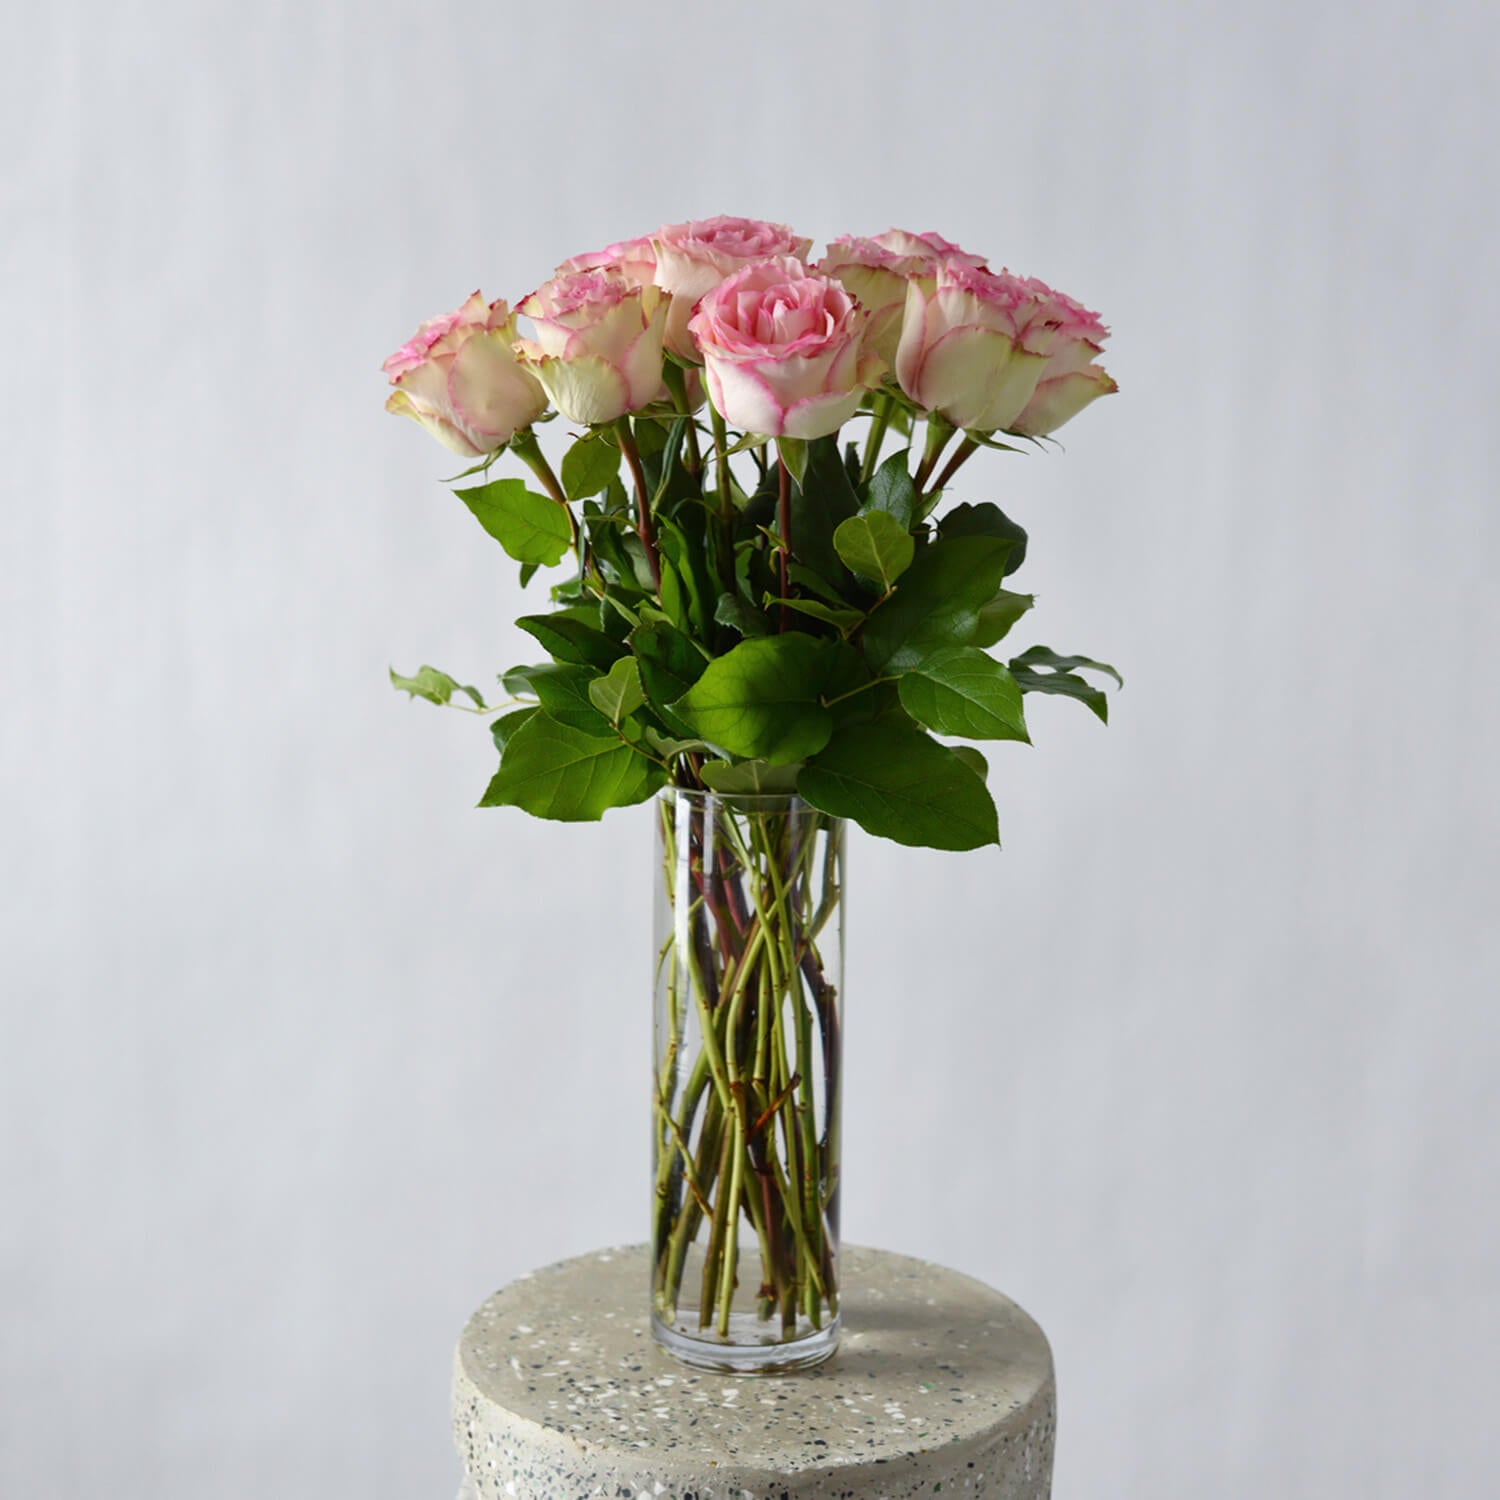 Congratulations flowers and flower arrangements